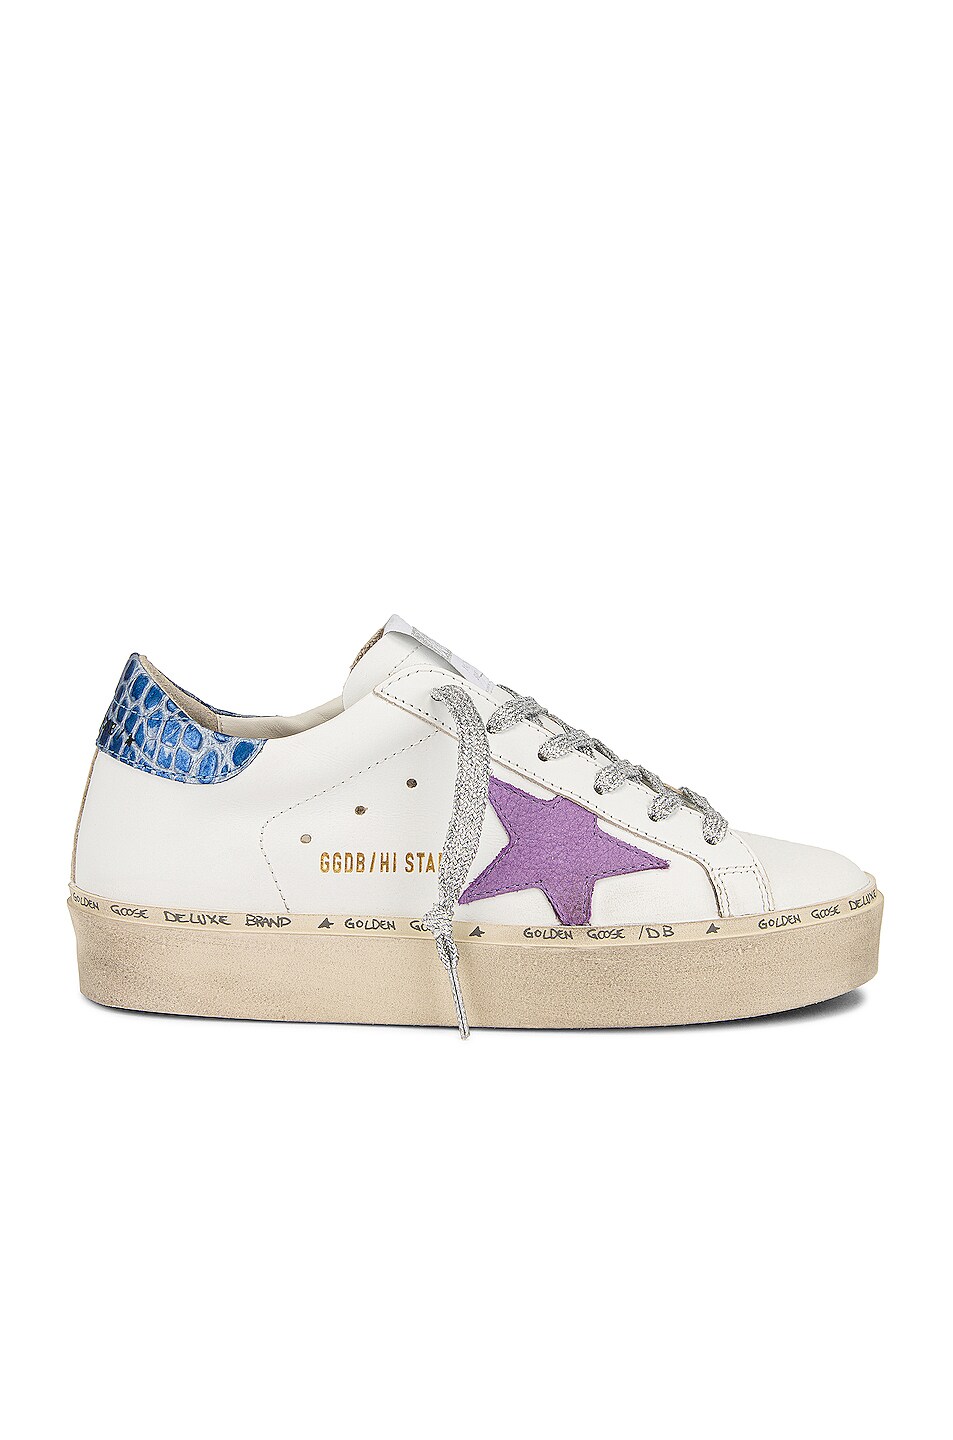 Image 1 of Golden Goose Hi Star Sneaker in White, Lavender, & Blue